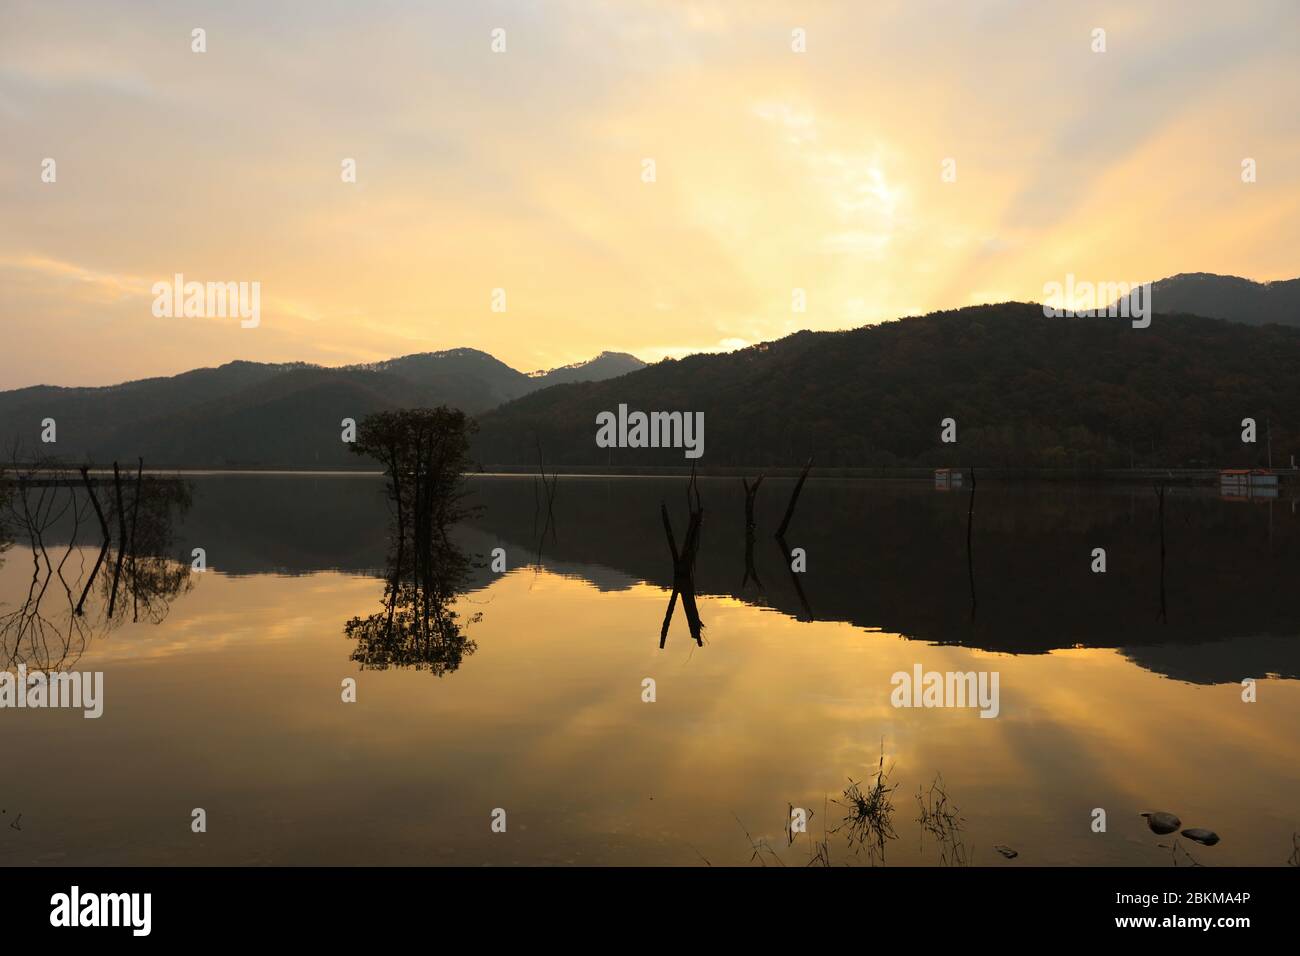 Reservoir Morgen schöne Sonnenaufgang Reflexion orange Himmel. Mungwang, Chungbuk, Korea Stockfoto